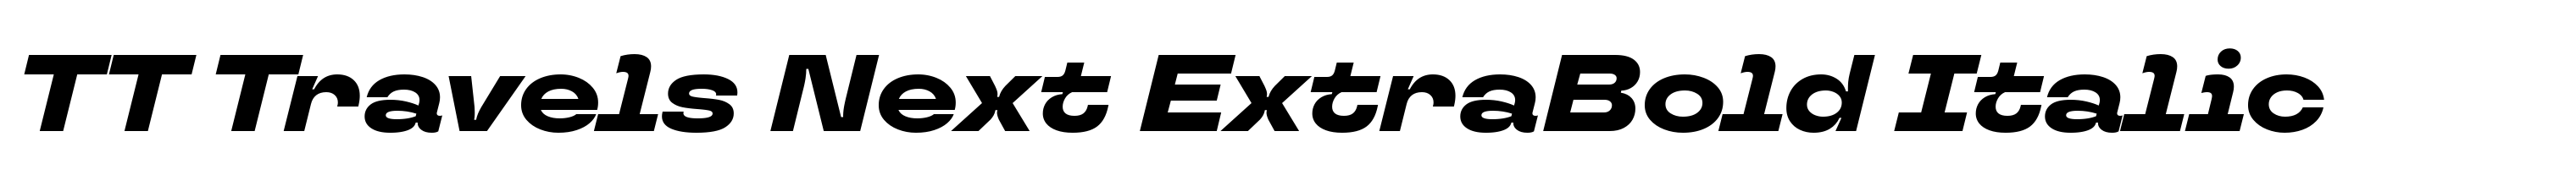 TT Travels Next ExtraBold Italic